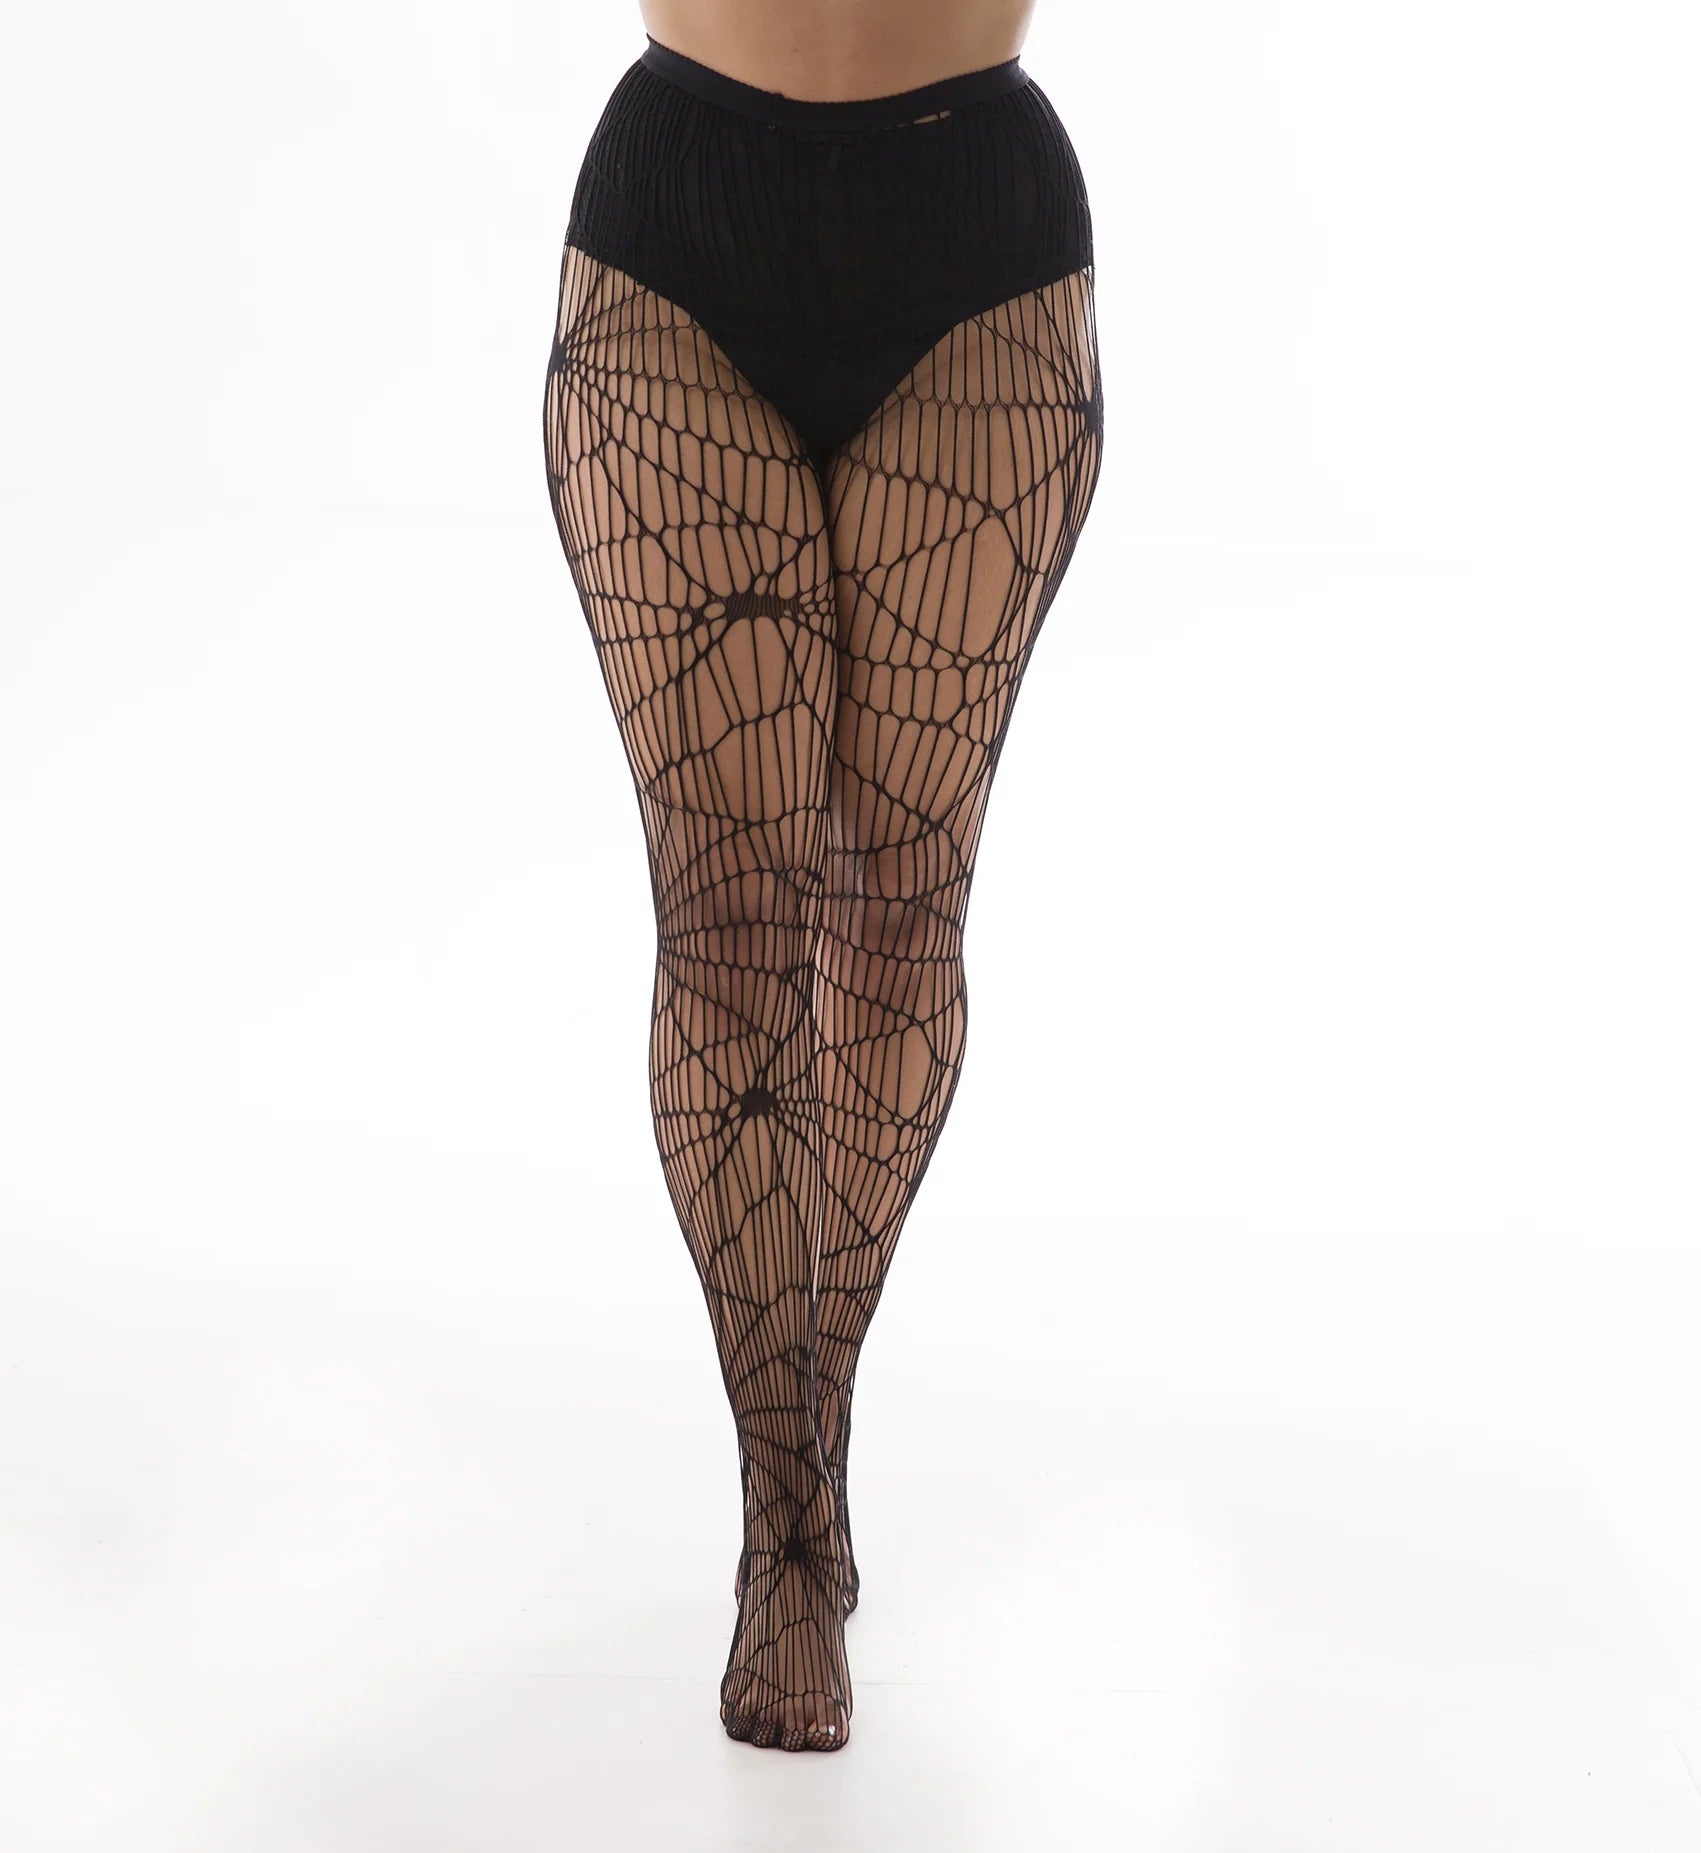 Pamela Mann Cobweb Tights - black openwork spider cobweb net tights, perfect for Halloween witch costume